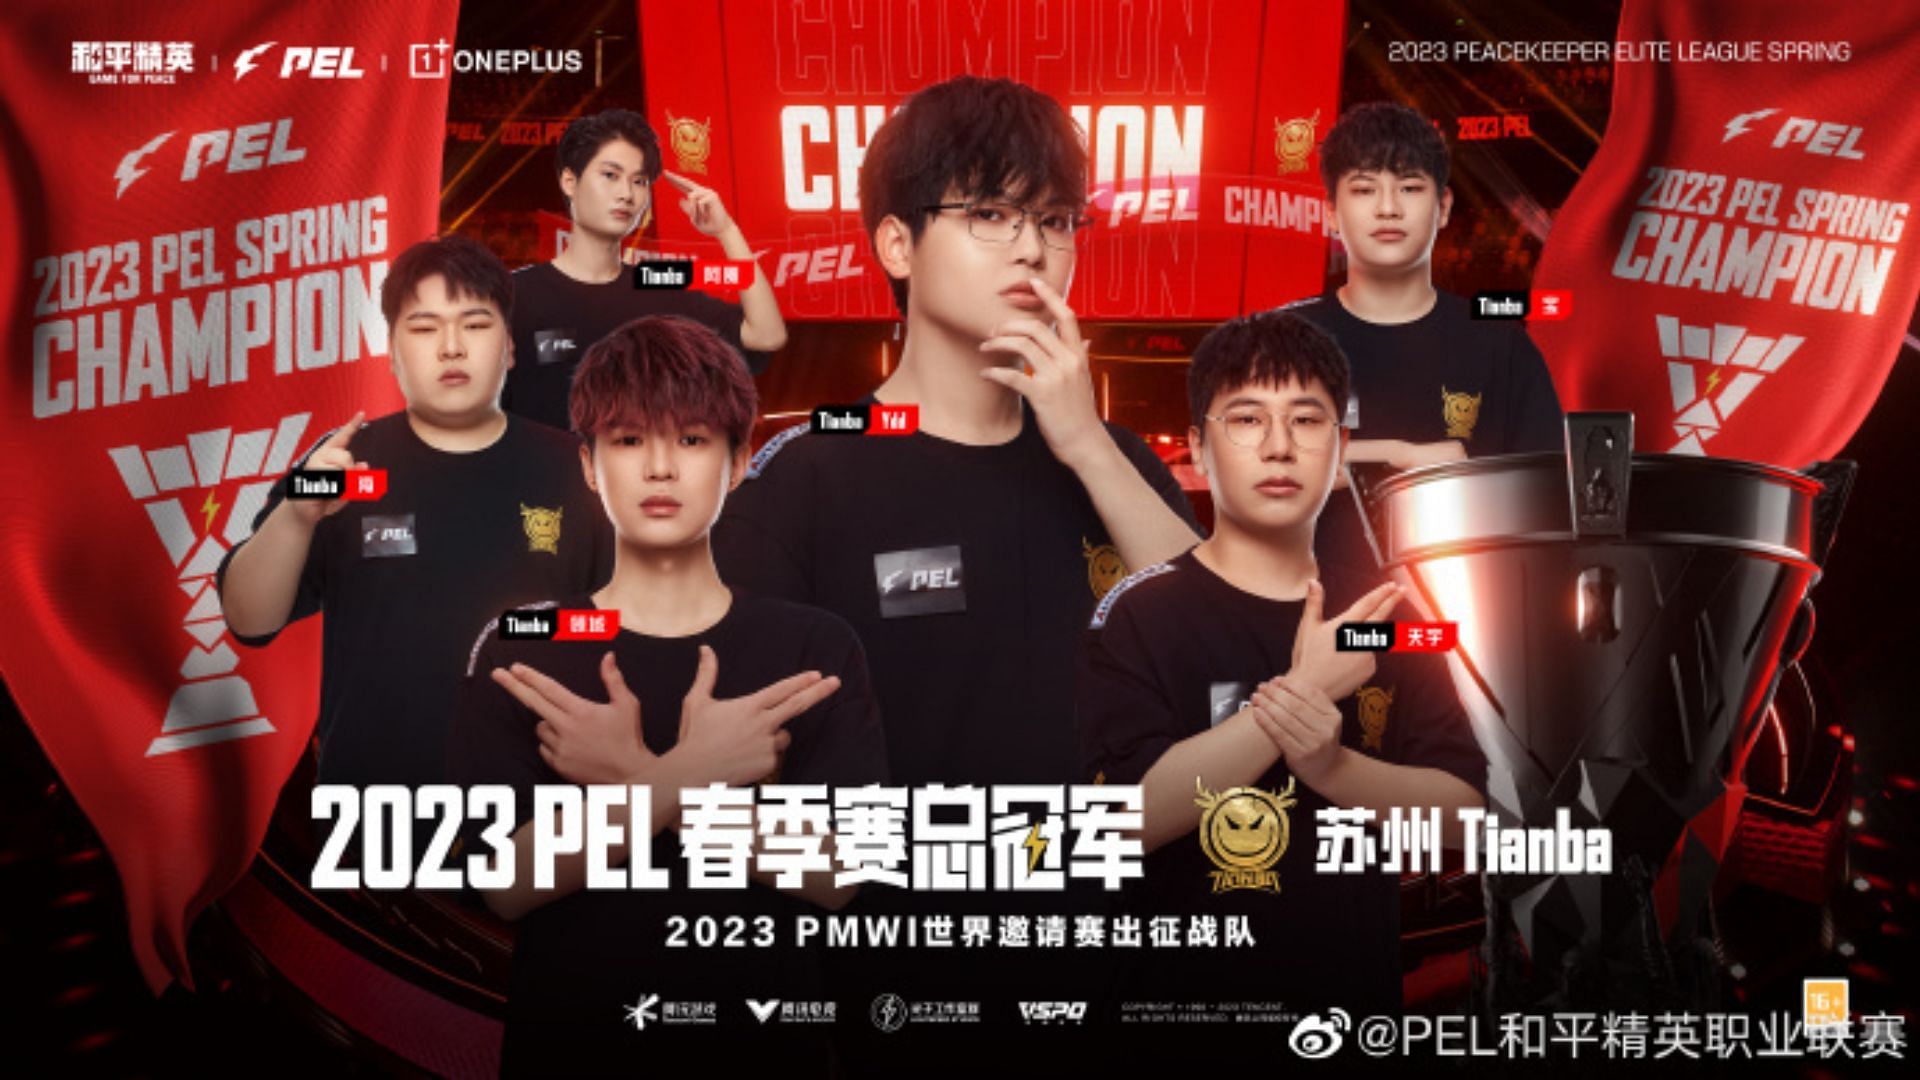 Tianba claims PEL 2023 Spring title (image via Tencent)